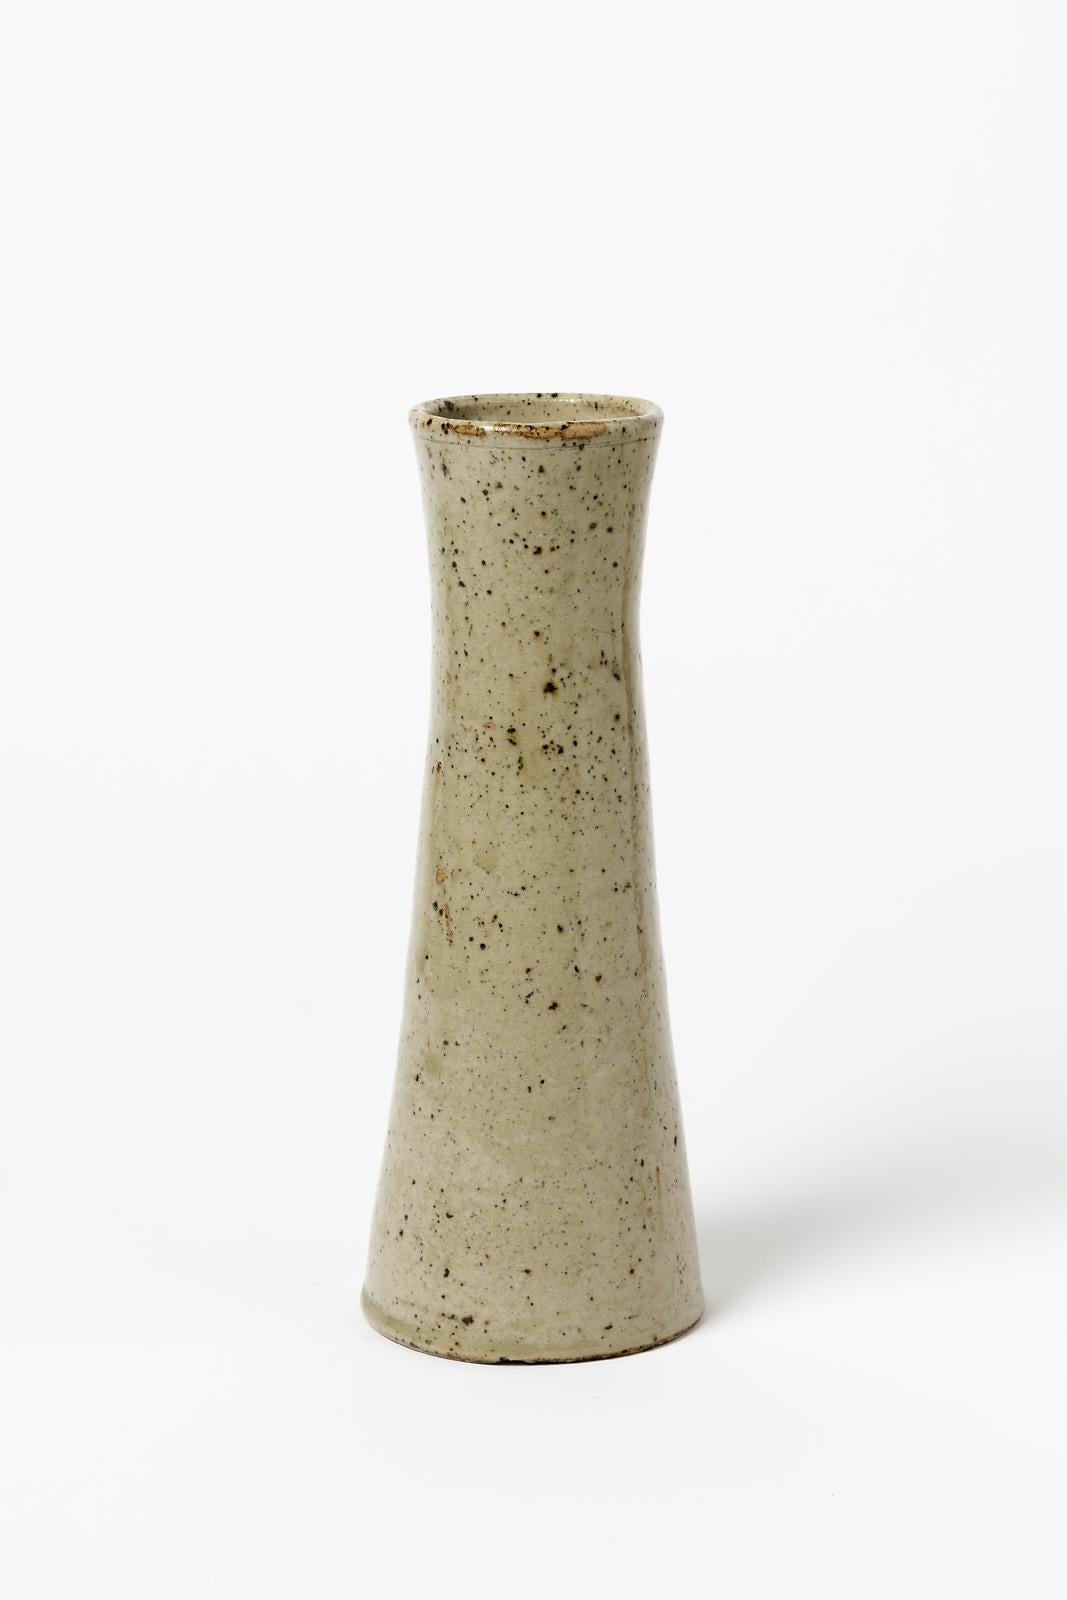 French 20th century modernist grey stoneware ceramic vase by Armand Bedu La Borne 1940 For Sale